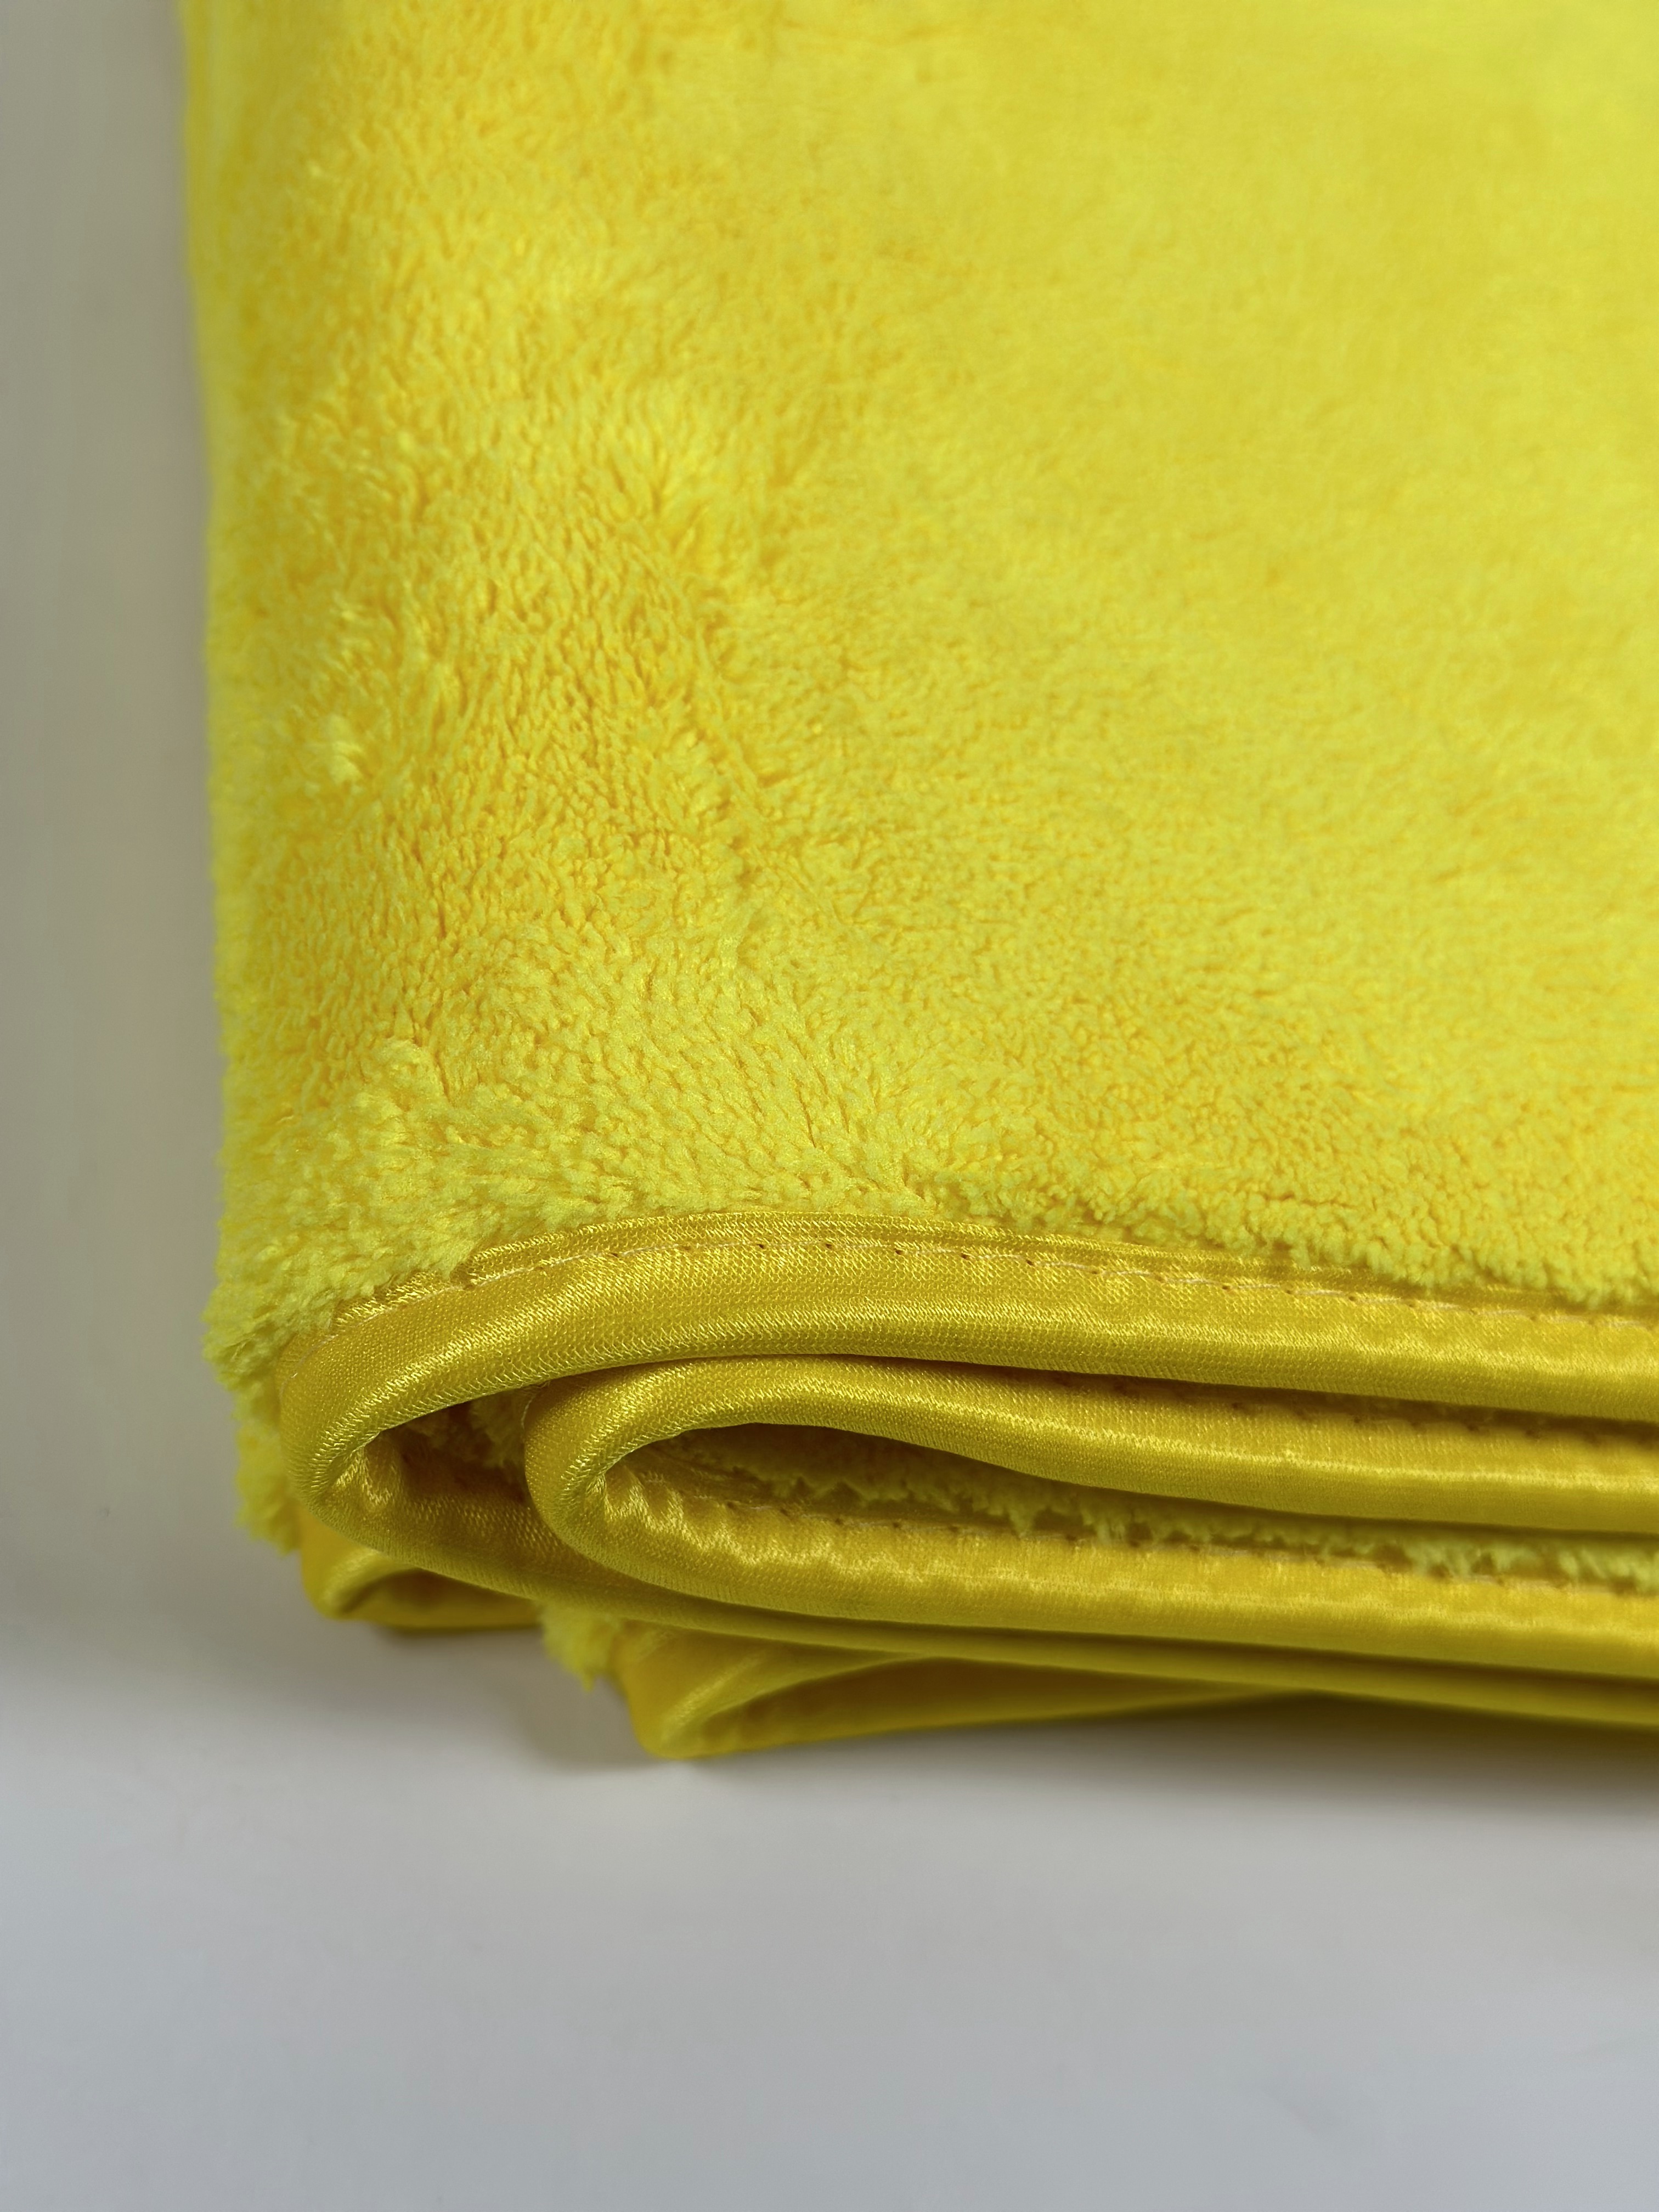 Полотенце AB Fluffy для сушки из микрофибры 60*90см, 800гр, желтое